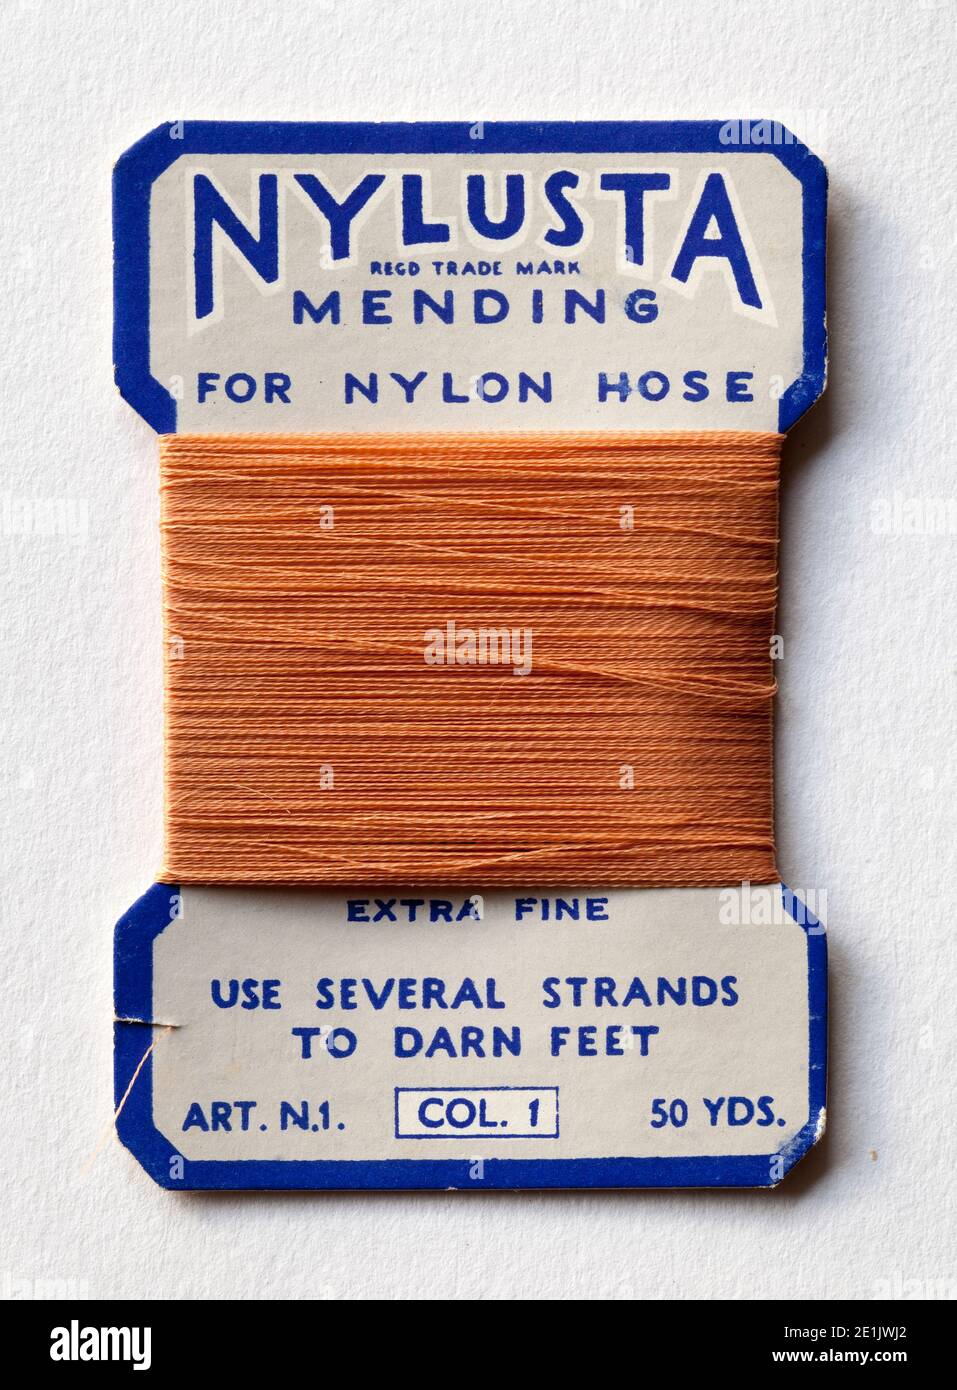 Vintage Nylusta Mending or Darning Thread Stock Photo - Alamy